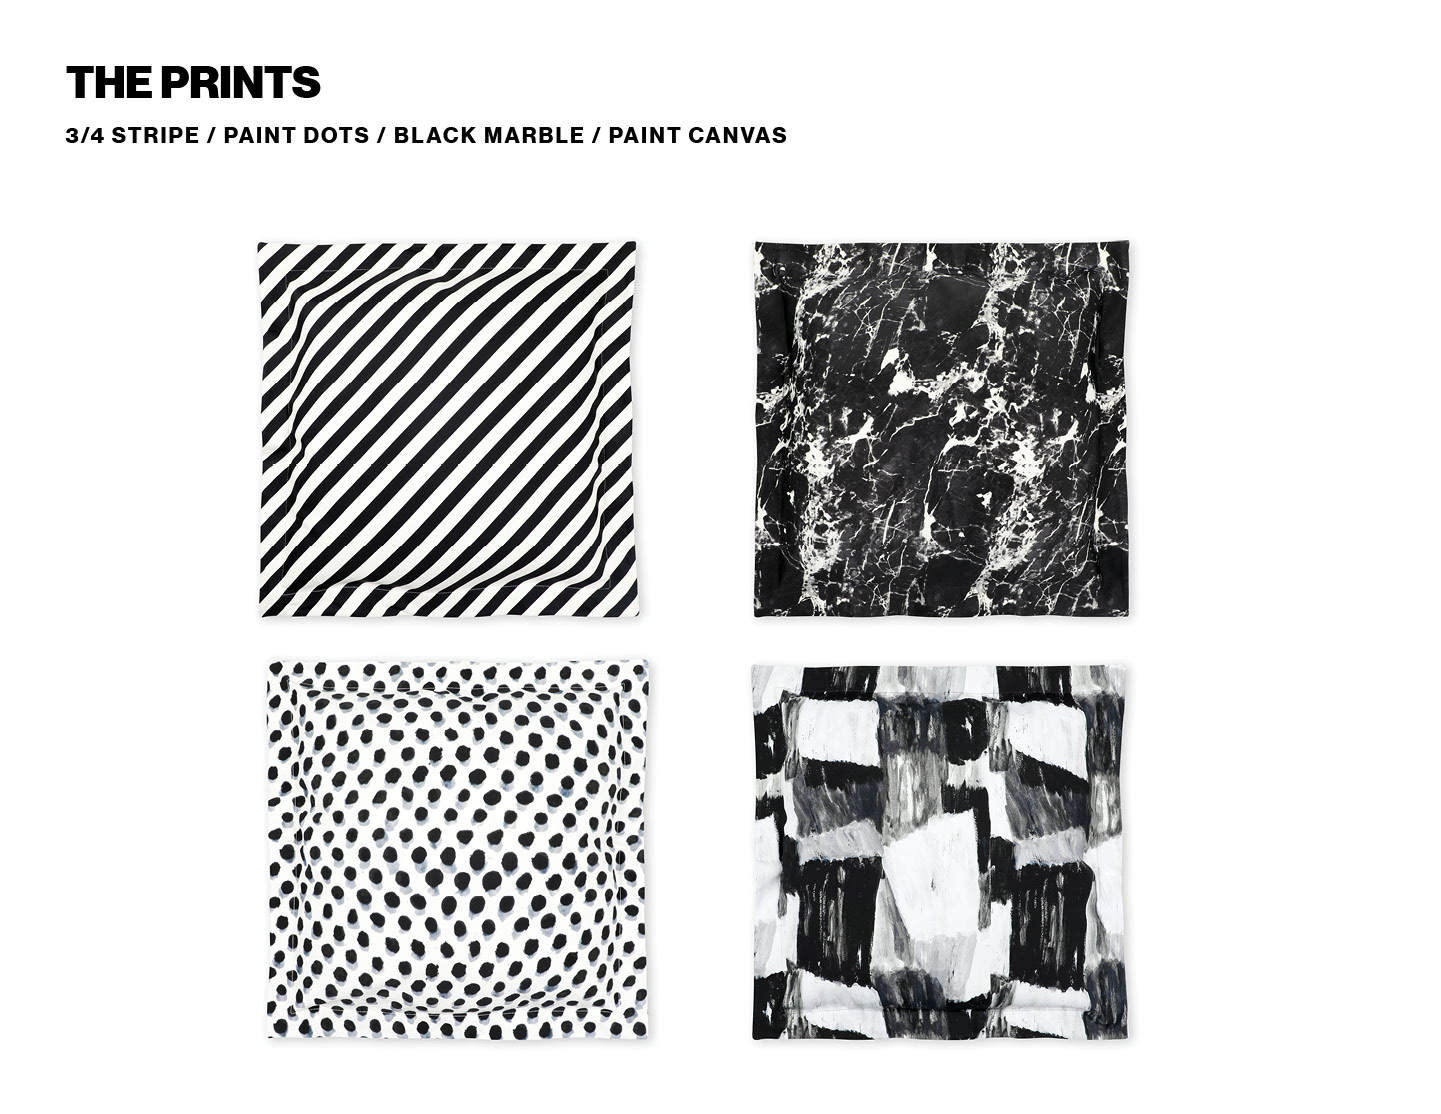 The Pillow prints